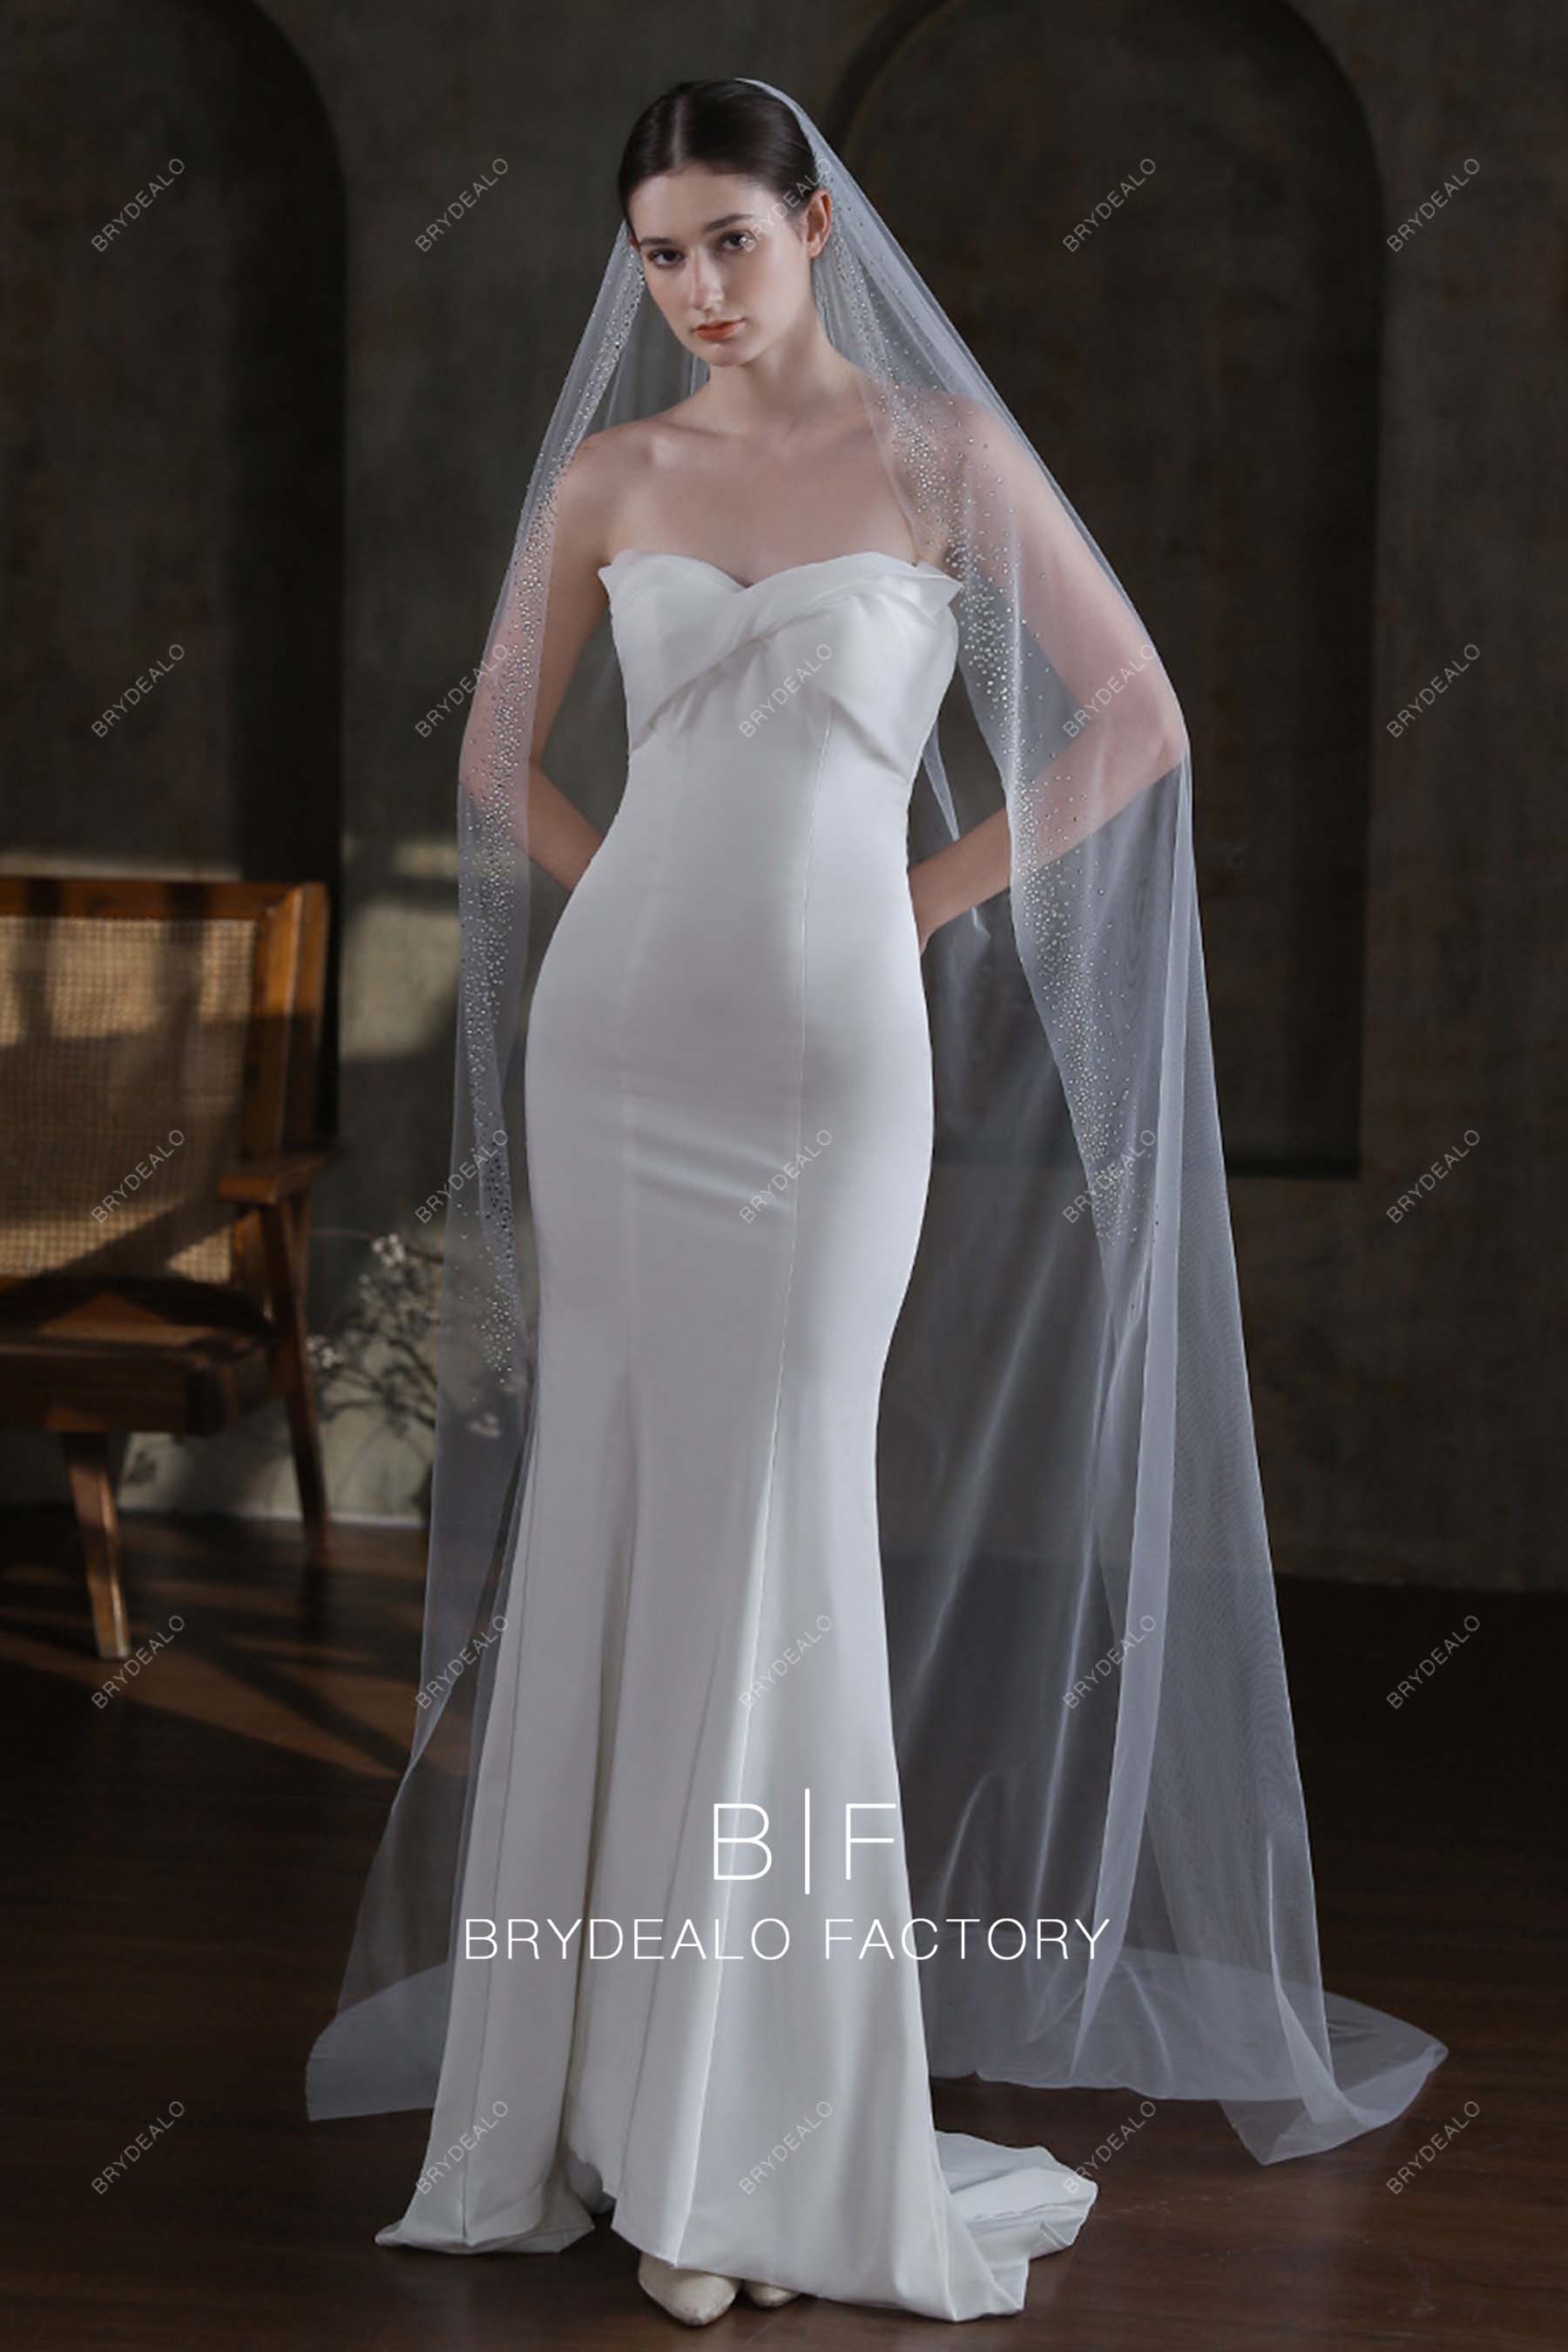 Pearl Cathedral Wedding Veil, Elegant Bridal Veil, Ivory Veil, Wedding Hair  Accessory, Classic Veil, White Veil, 300CM Bridal Veil 